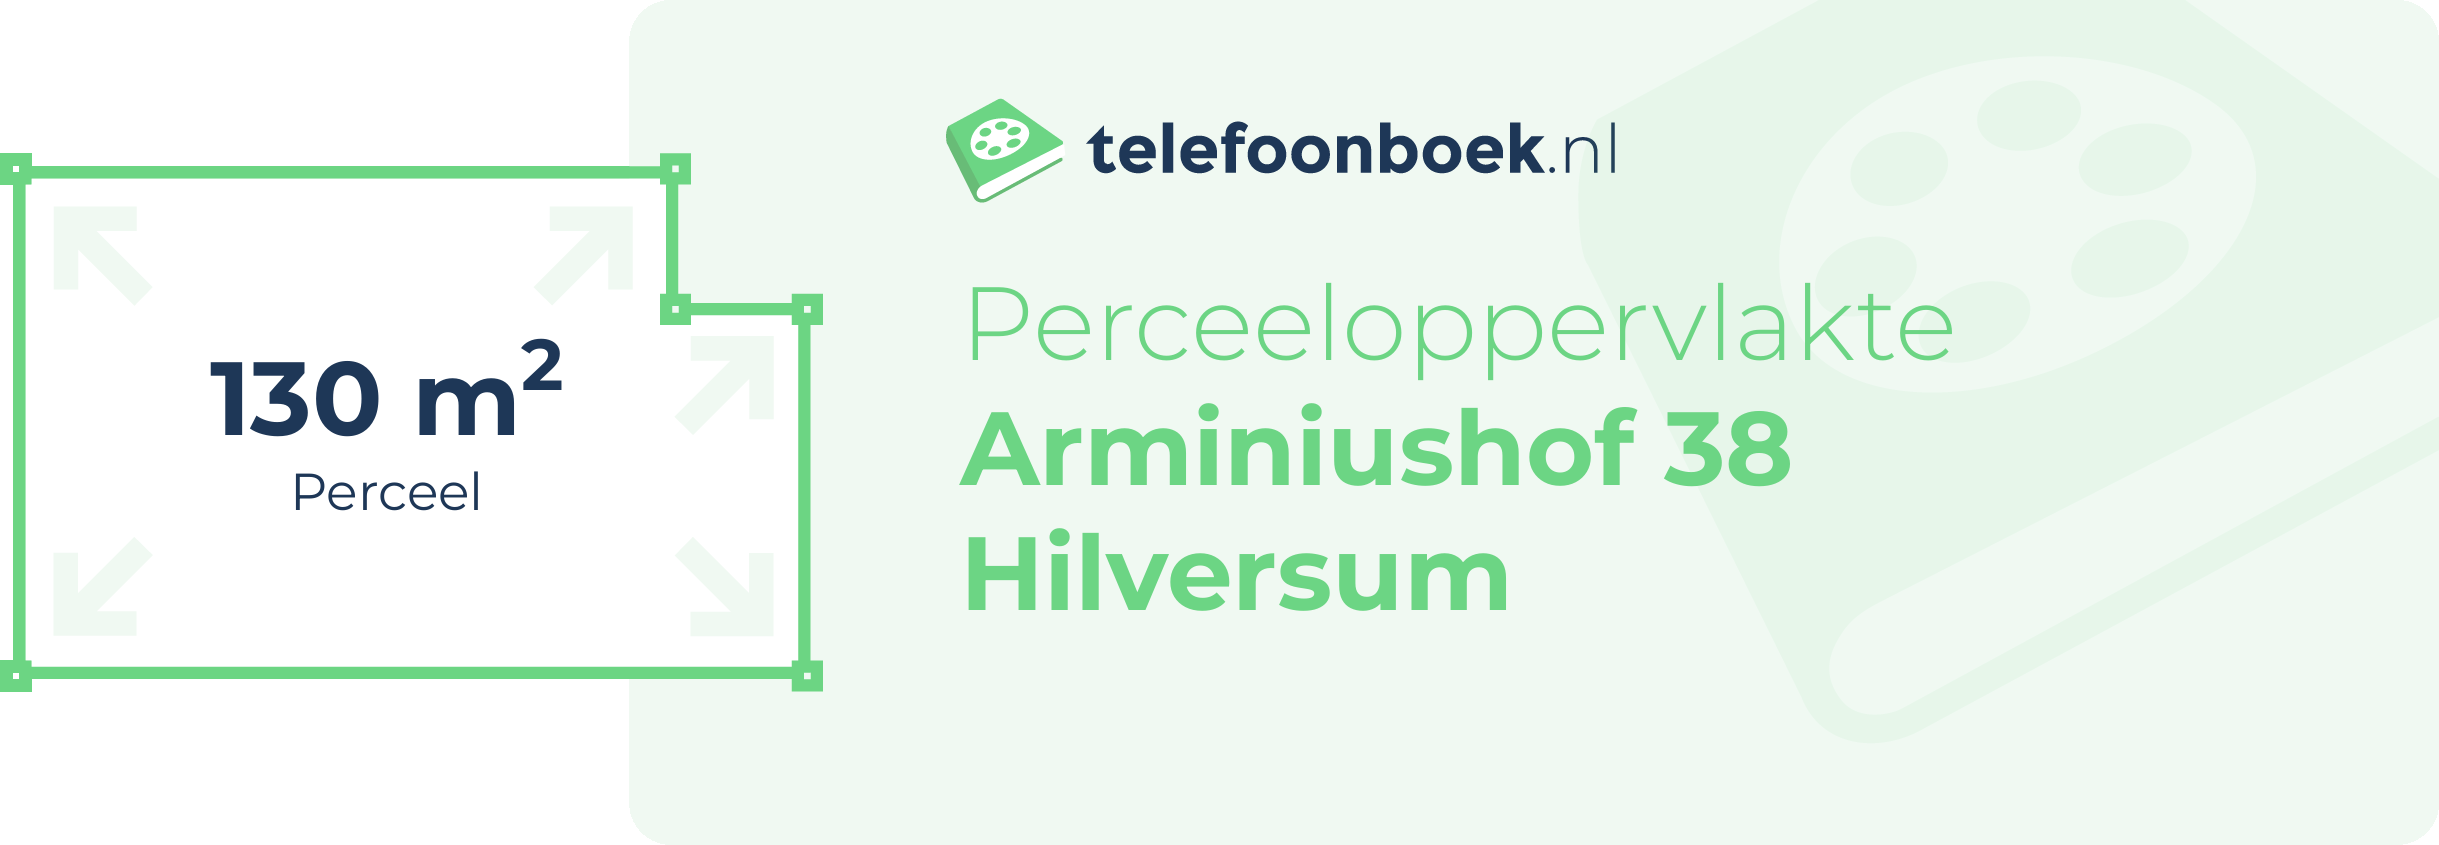 Perceeloppervlakte Arminiushof 38 Hilversum